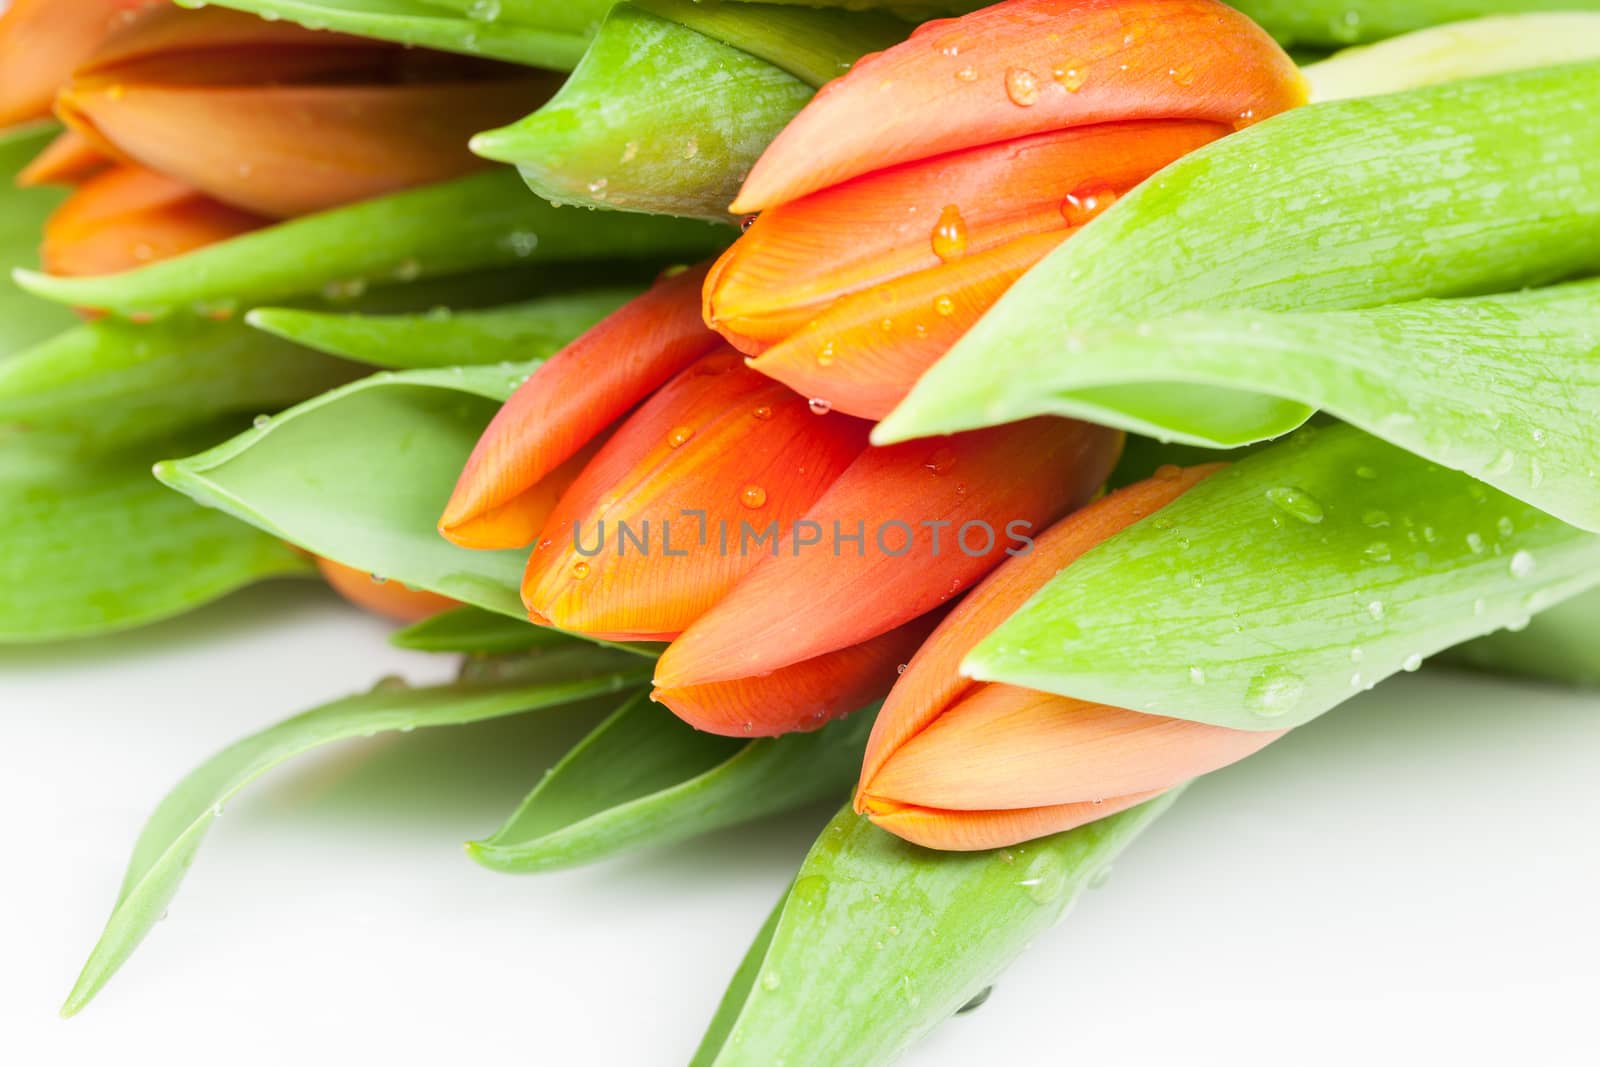 Beautiful orange tulips by Slast20